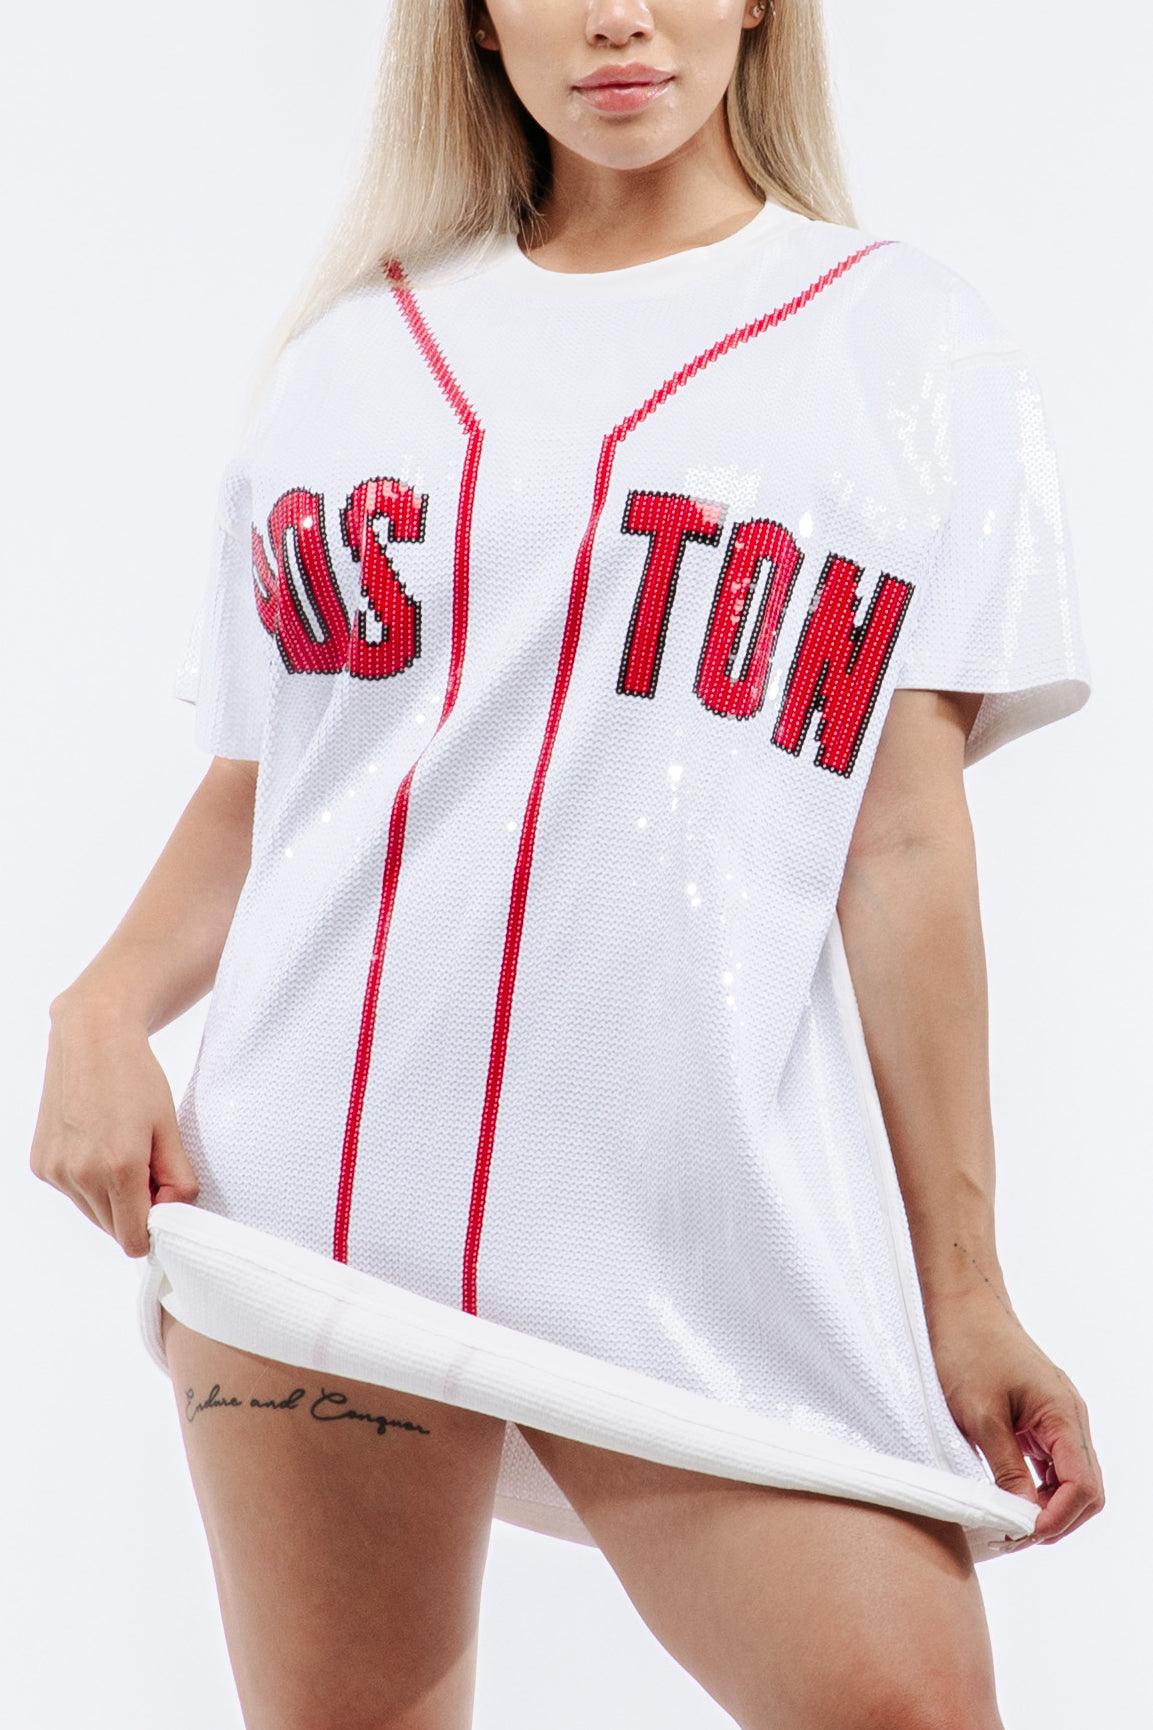 Boston Baseball Sequin Dress - SEQUIN FANS